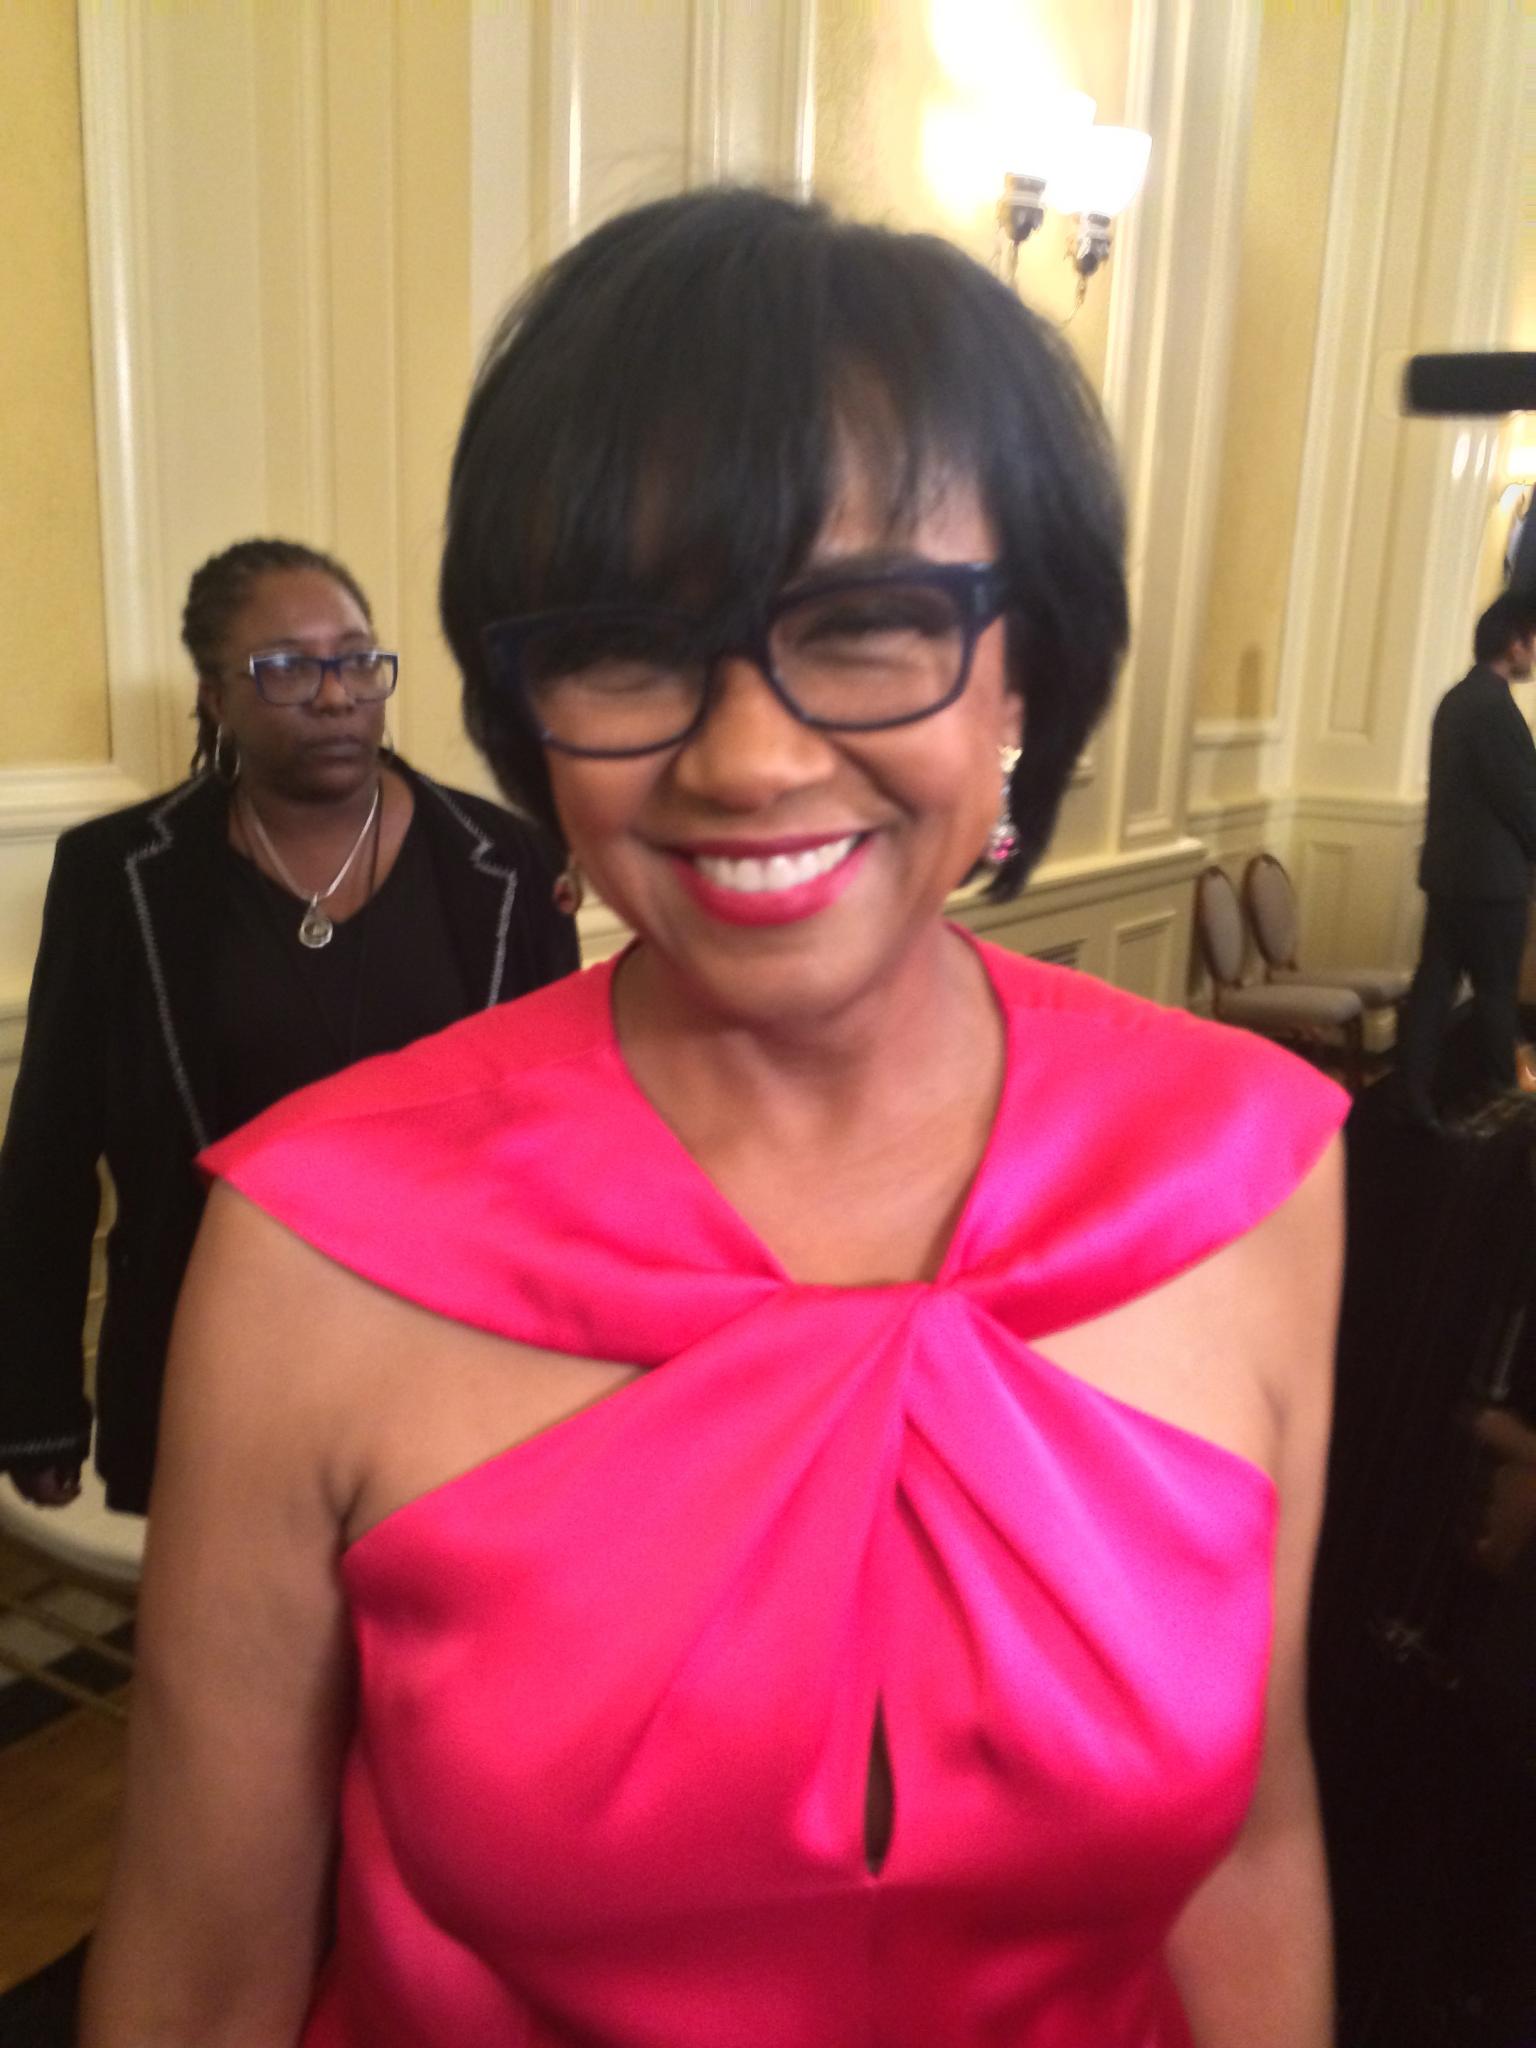 PHOTOS: Inside the NAACP Image Awards
